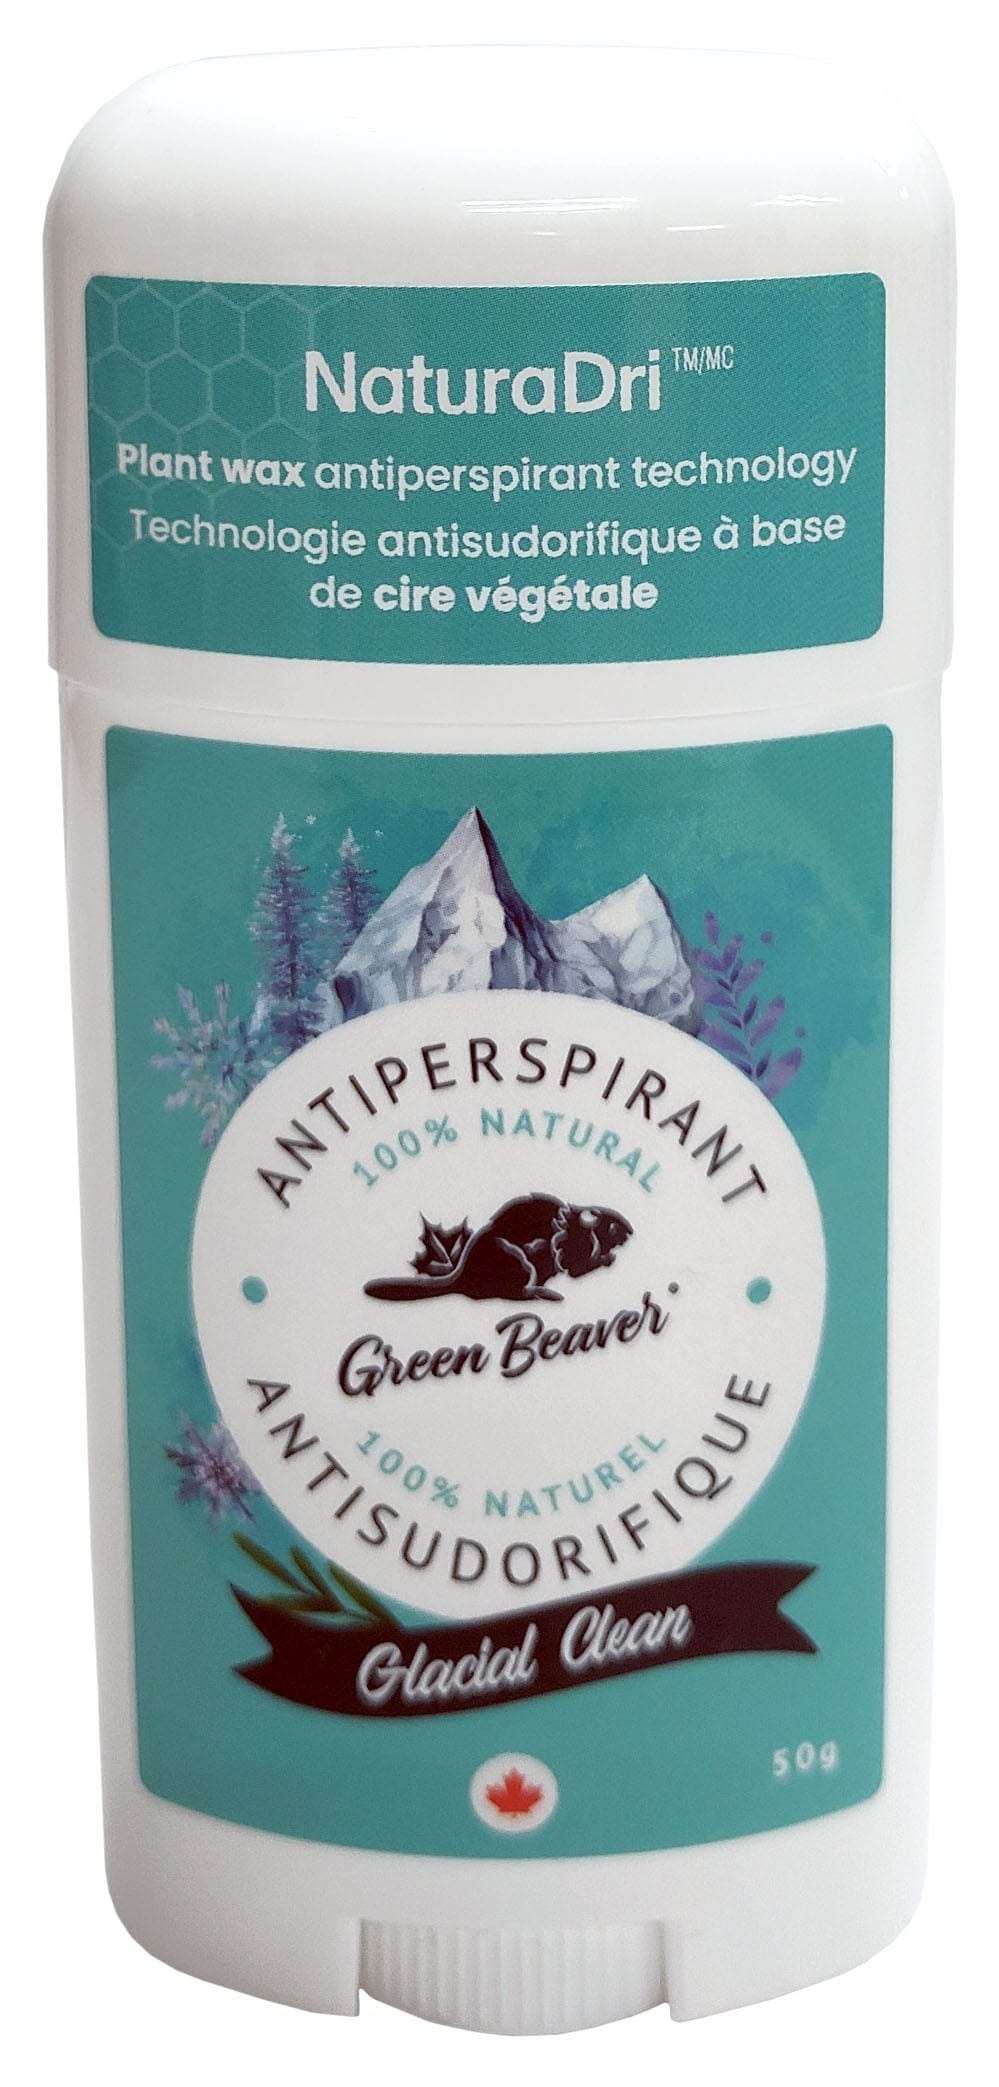 GREEN BEAVER Soins & beauté Antisudorifique Glacial clean 50g